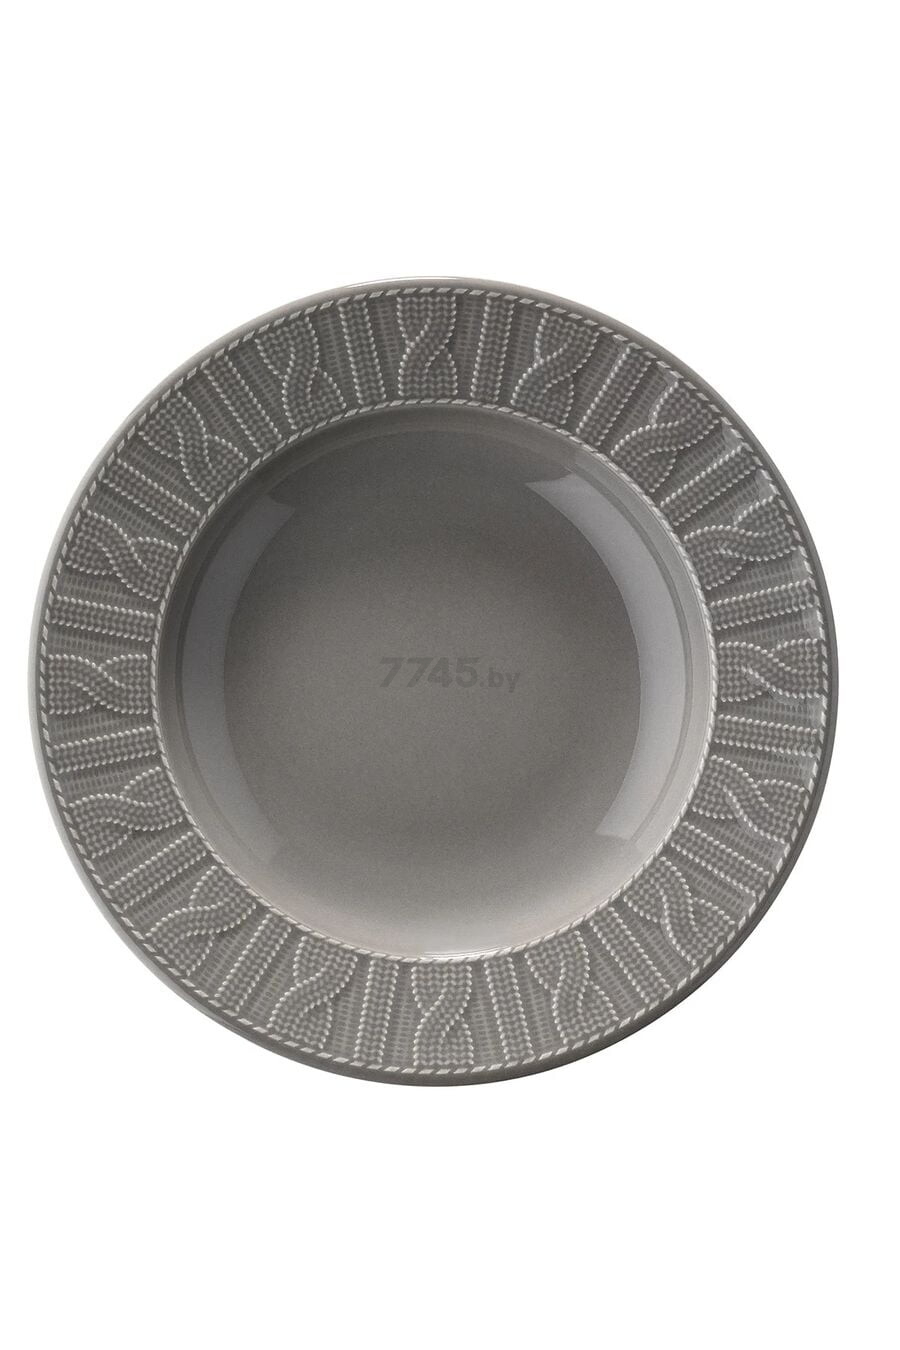 Набор посуды KUTAHYA Selanik 24 предмета серый (8697828864710) - Фото 3